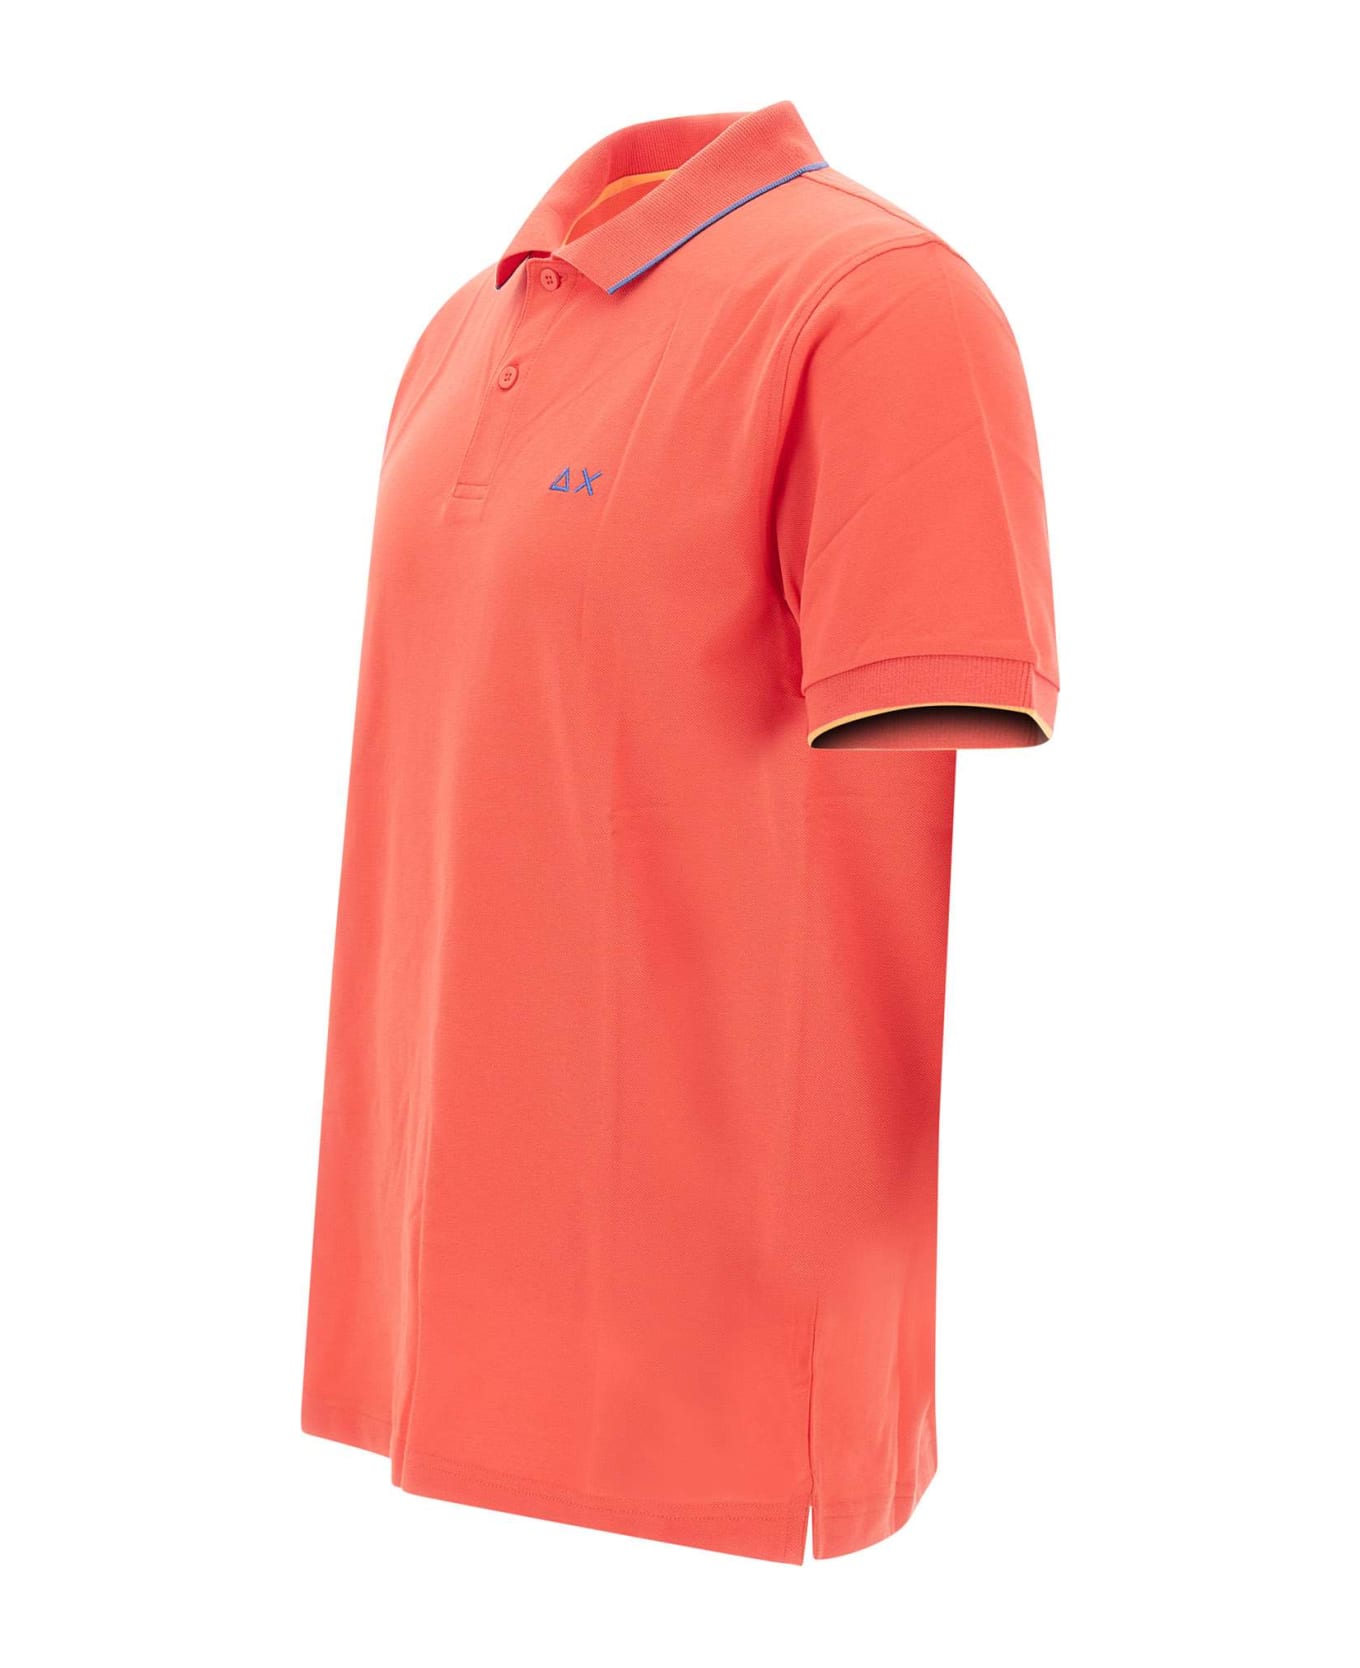 Sun 68 "small Stripe" Cotton Polo Shirt - RED